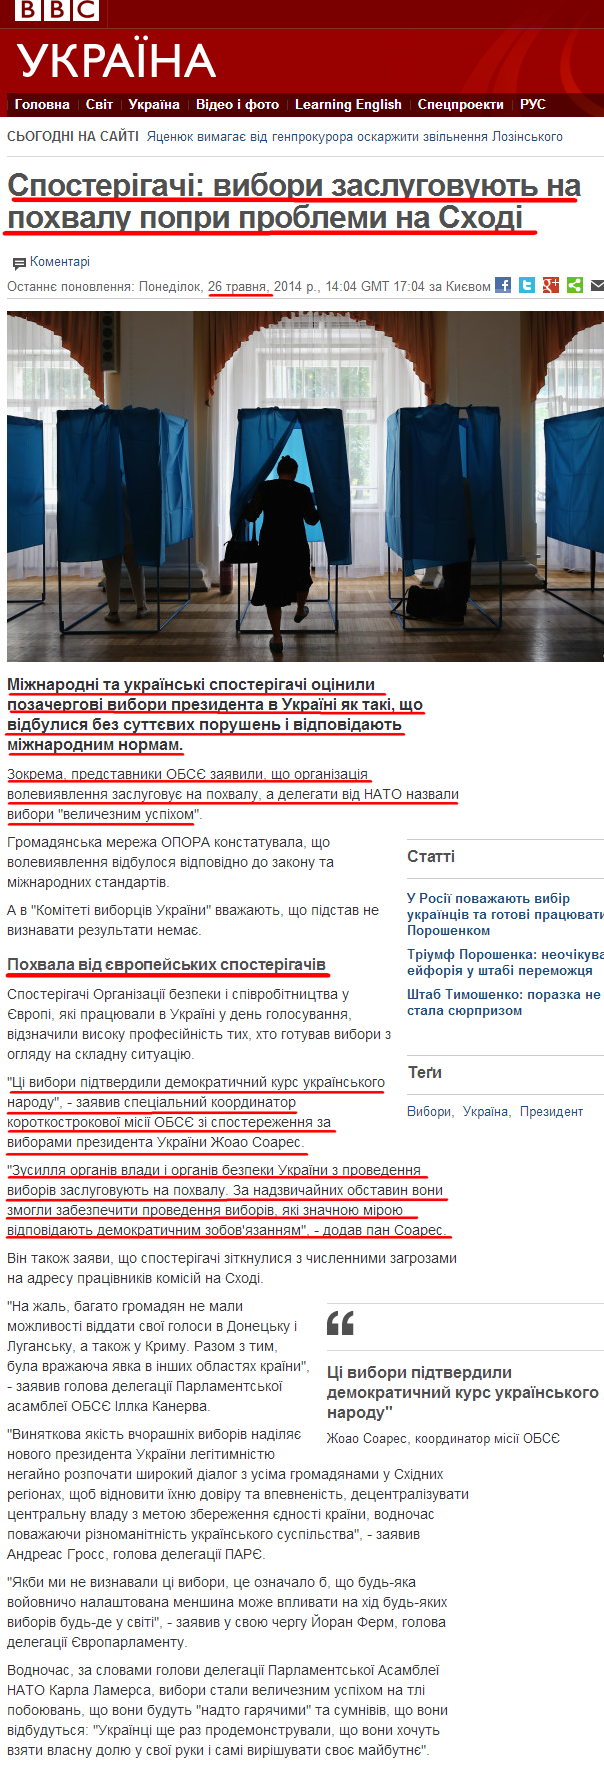 http://www.bbc.co.uk/ukrainian/politics/2014/05/140526_election_results_comments_rl.shtml